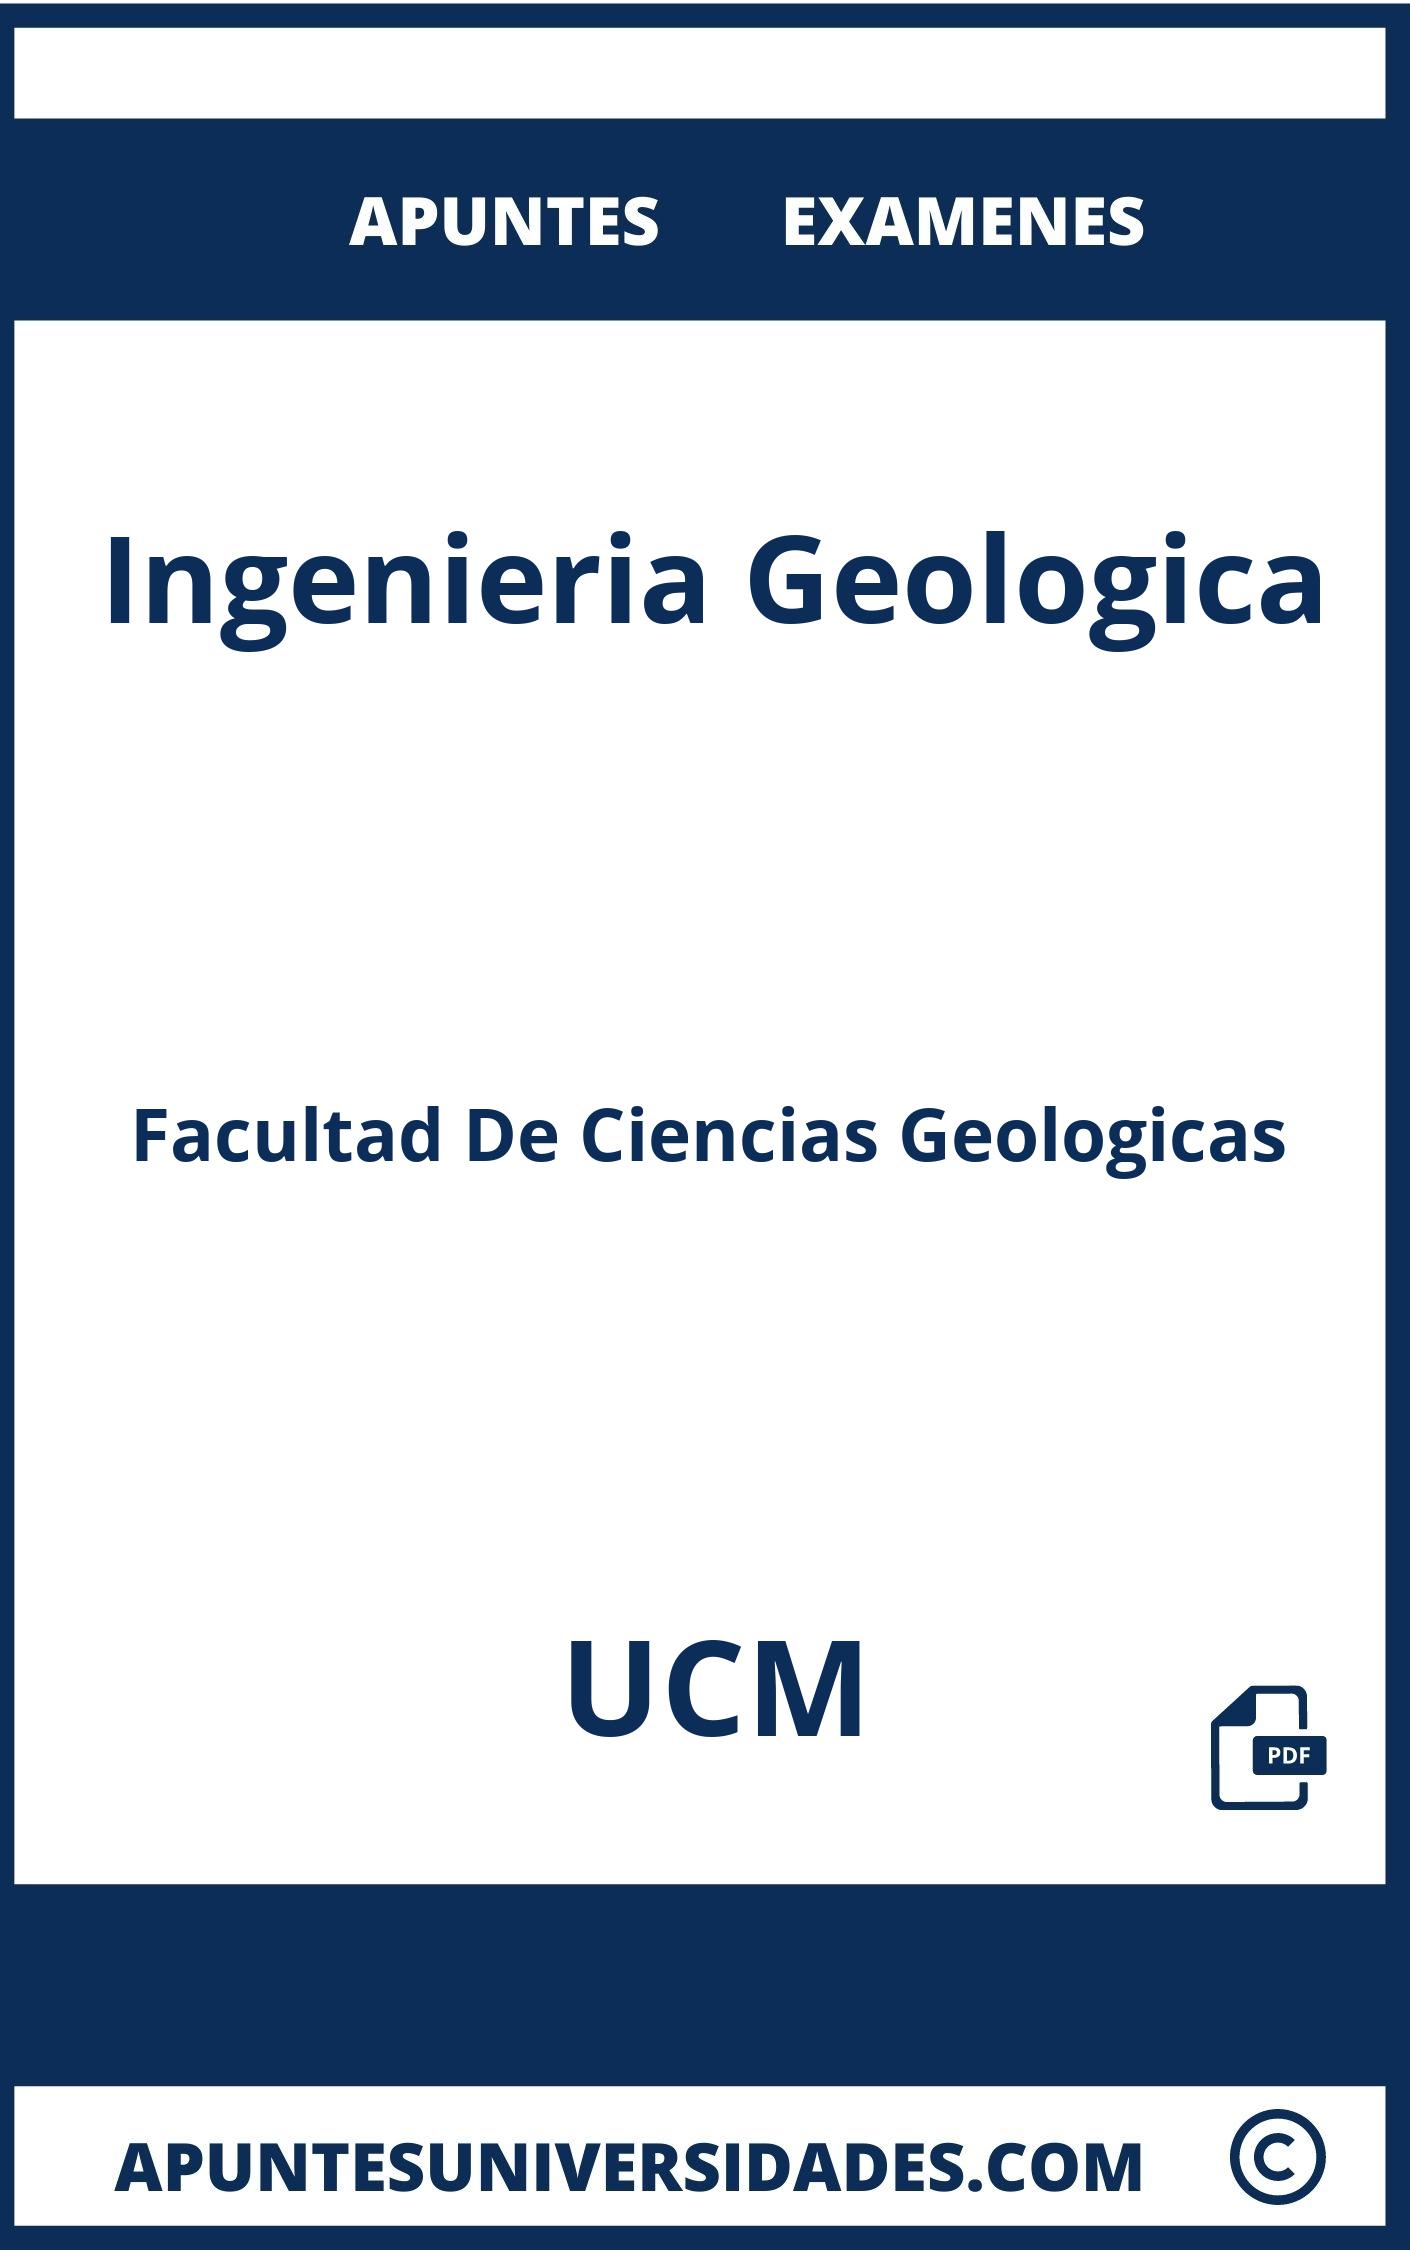 Apuntes y Examenes Ingenieria Geologica UCM